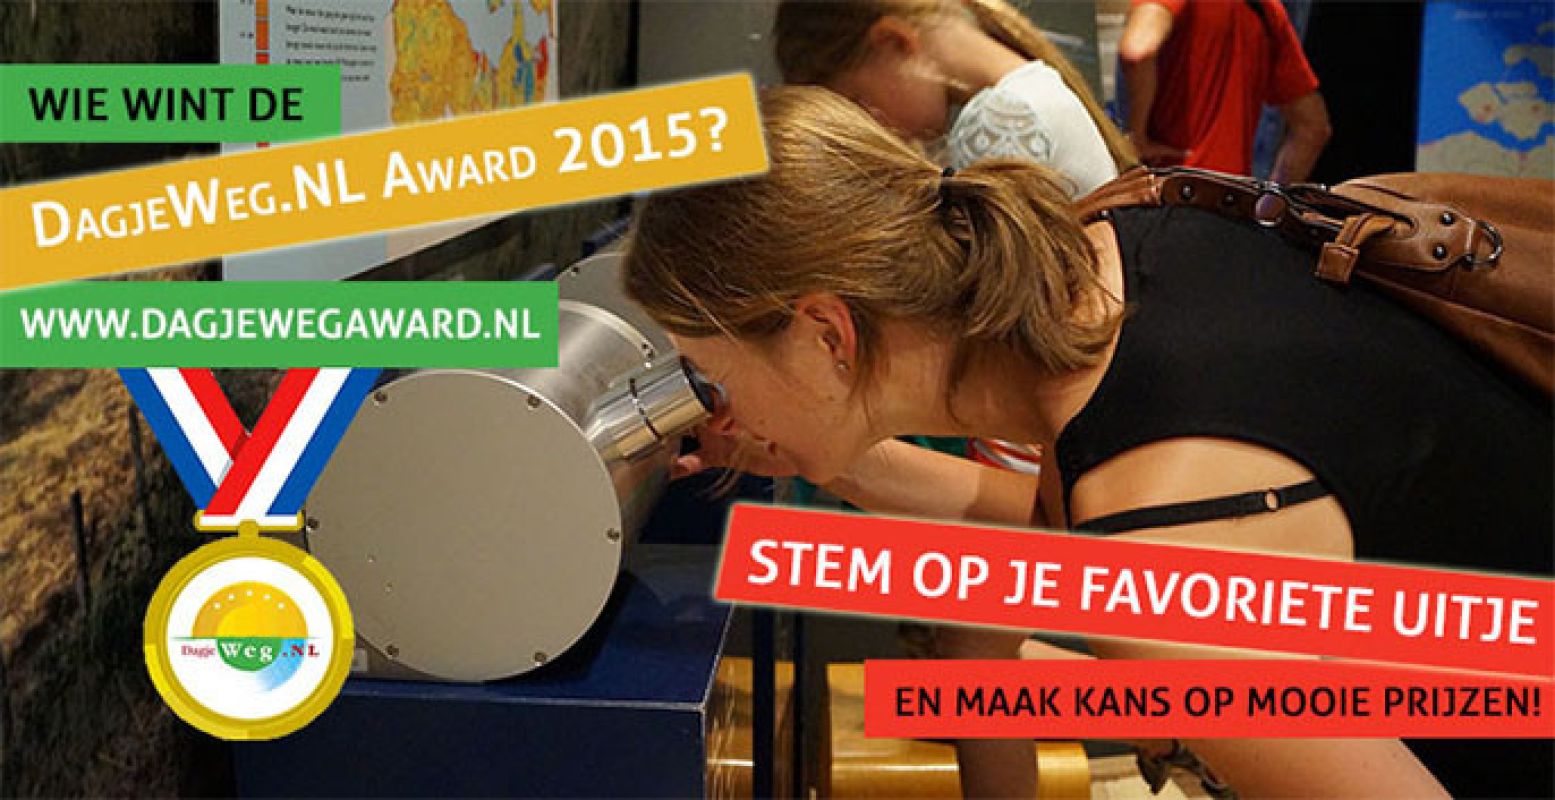 Wie wint de DagjeWeg.NL Award 2015?  Stem op je favoriete uitje  en win vrijkaarten!